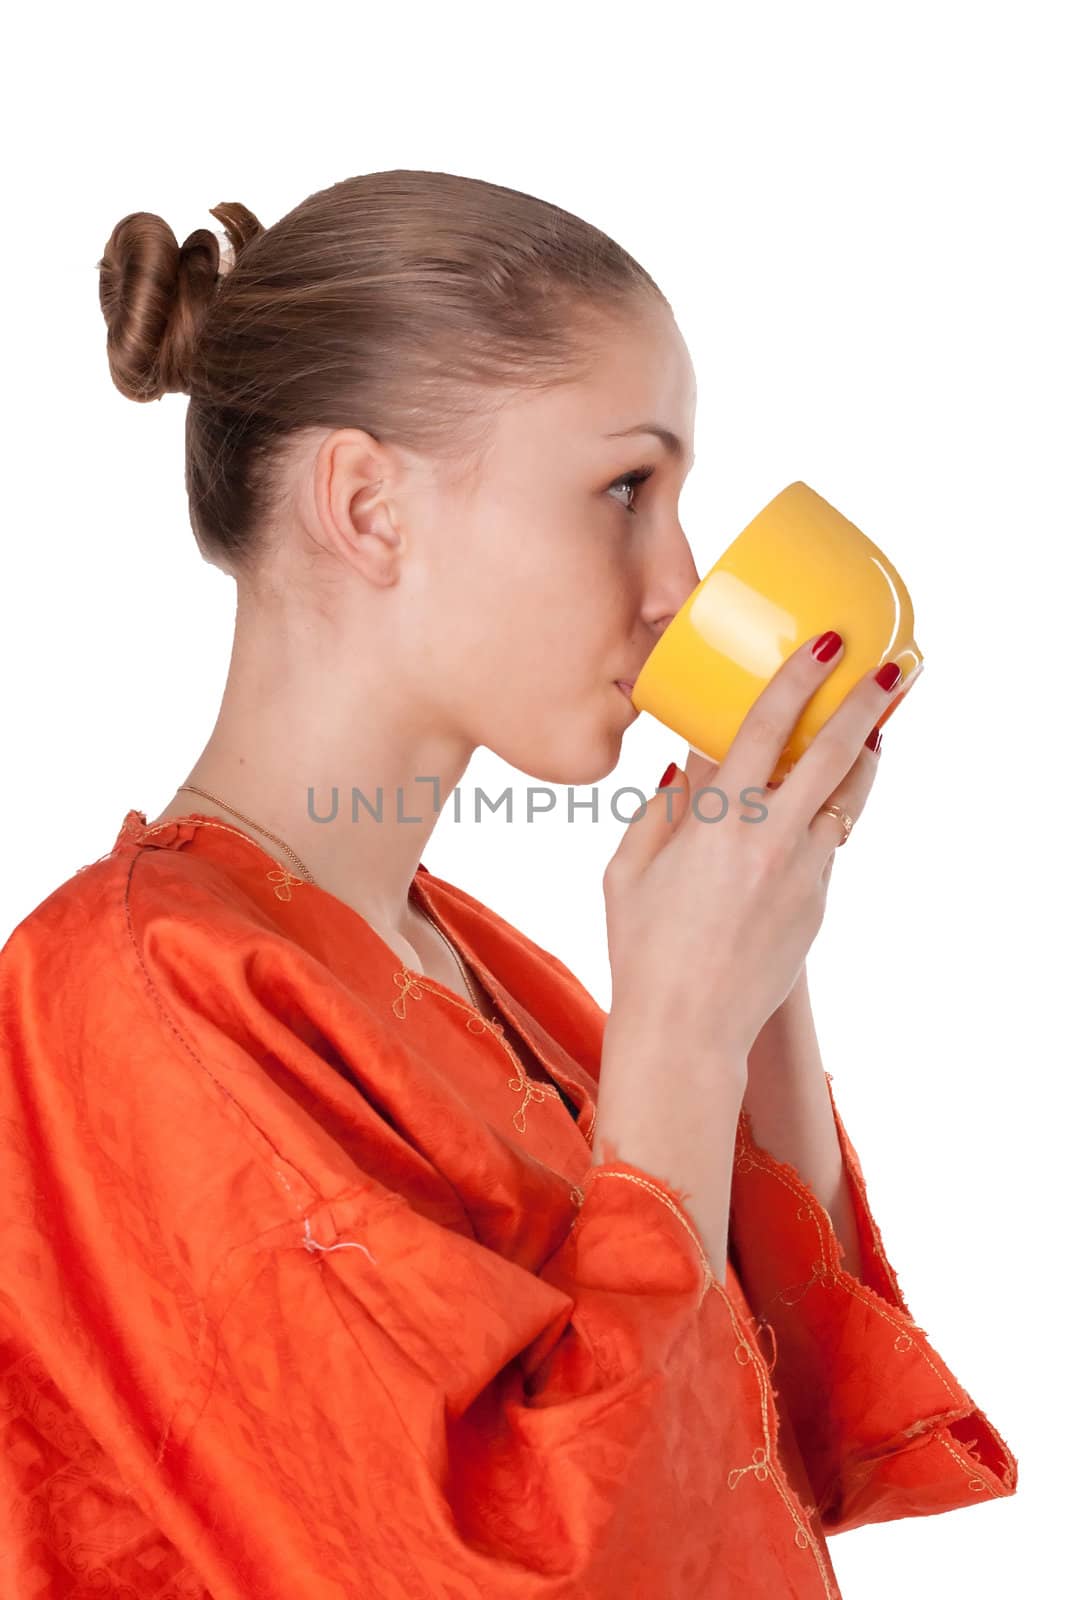 The girl in the orange robe drinking tea  by victosha